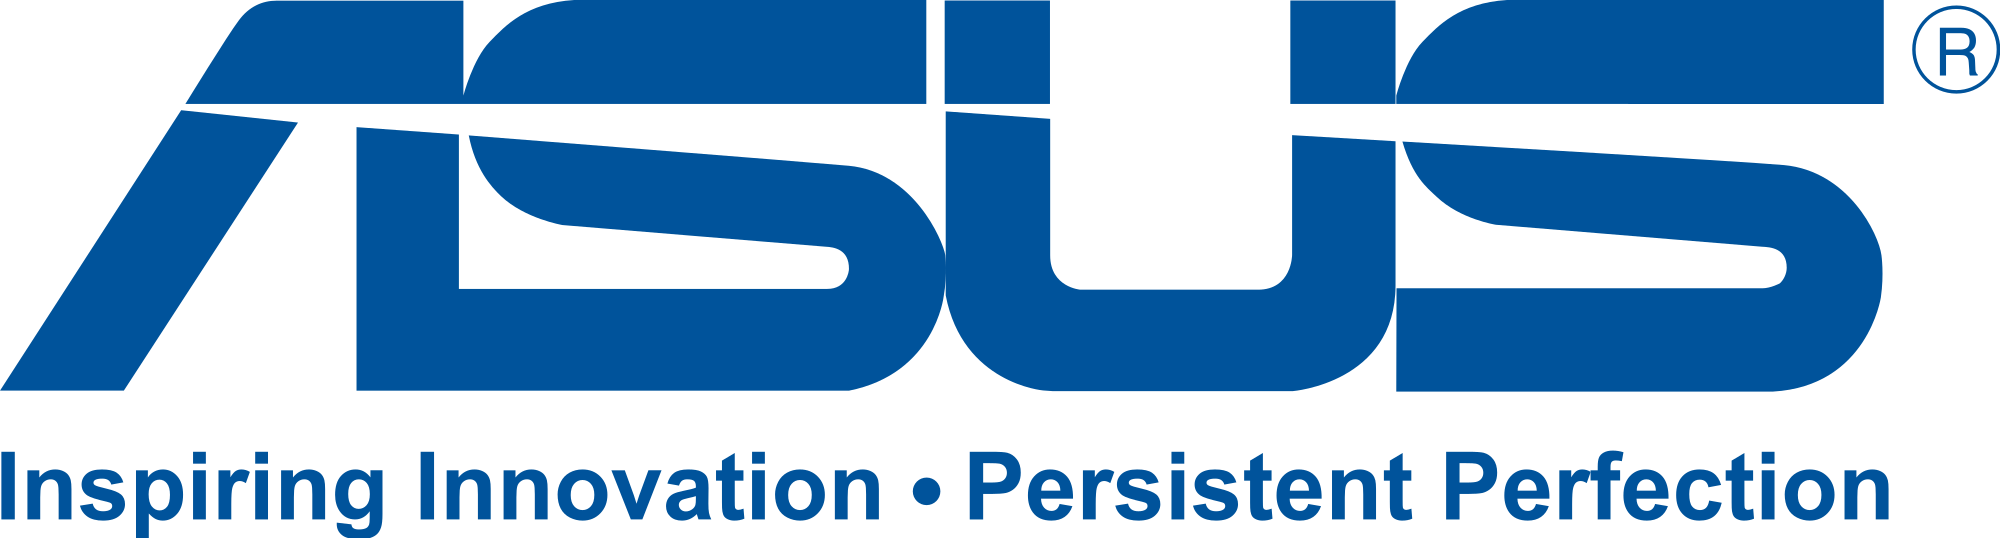 Asus Logo Png 2000 X 538